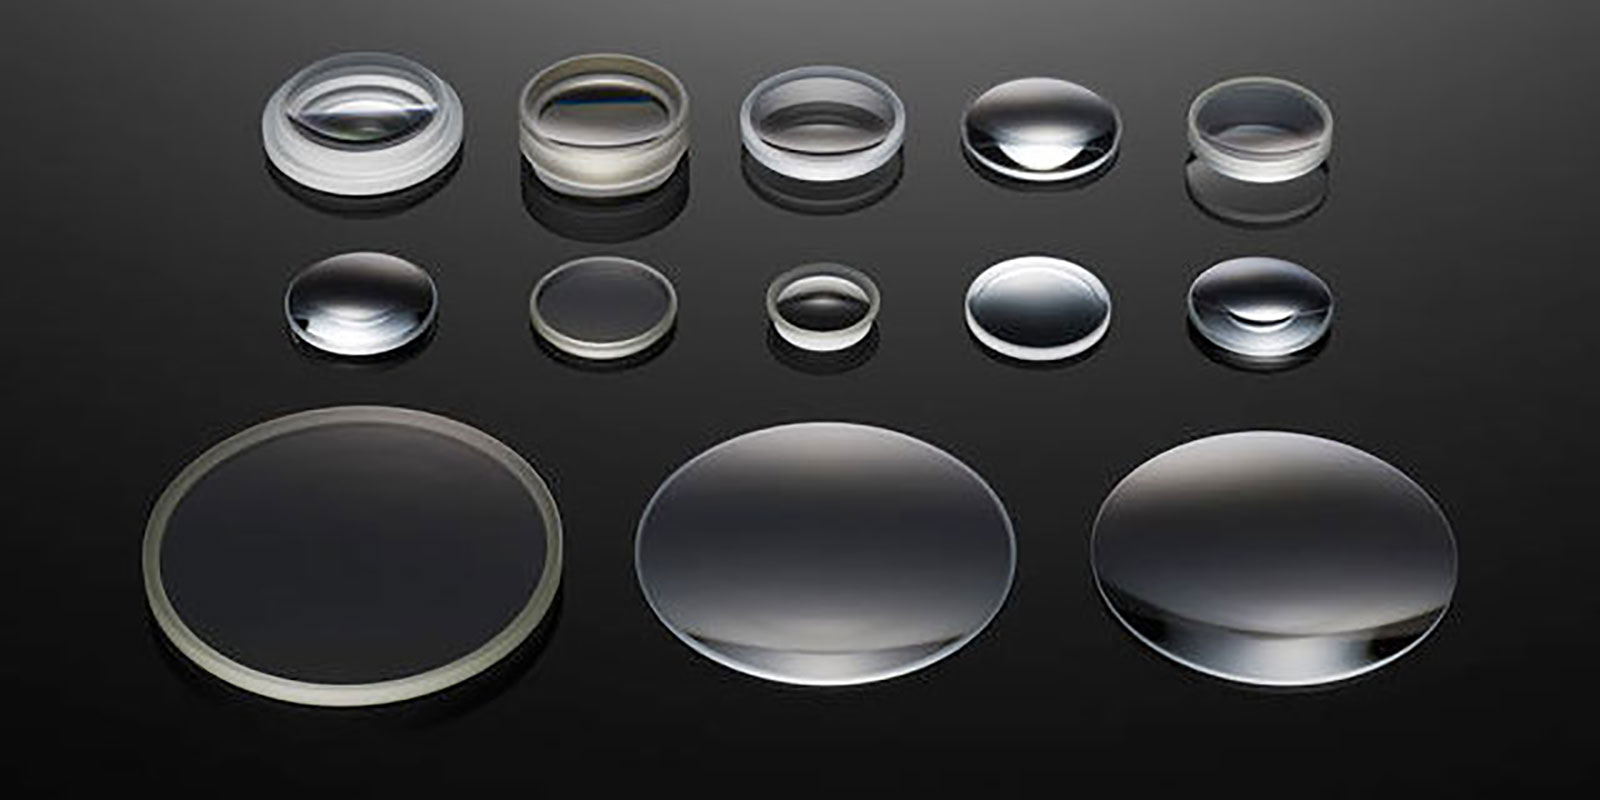 Sony-RX10-III-lens-elements